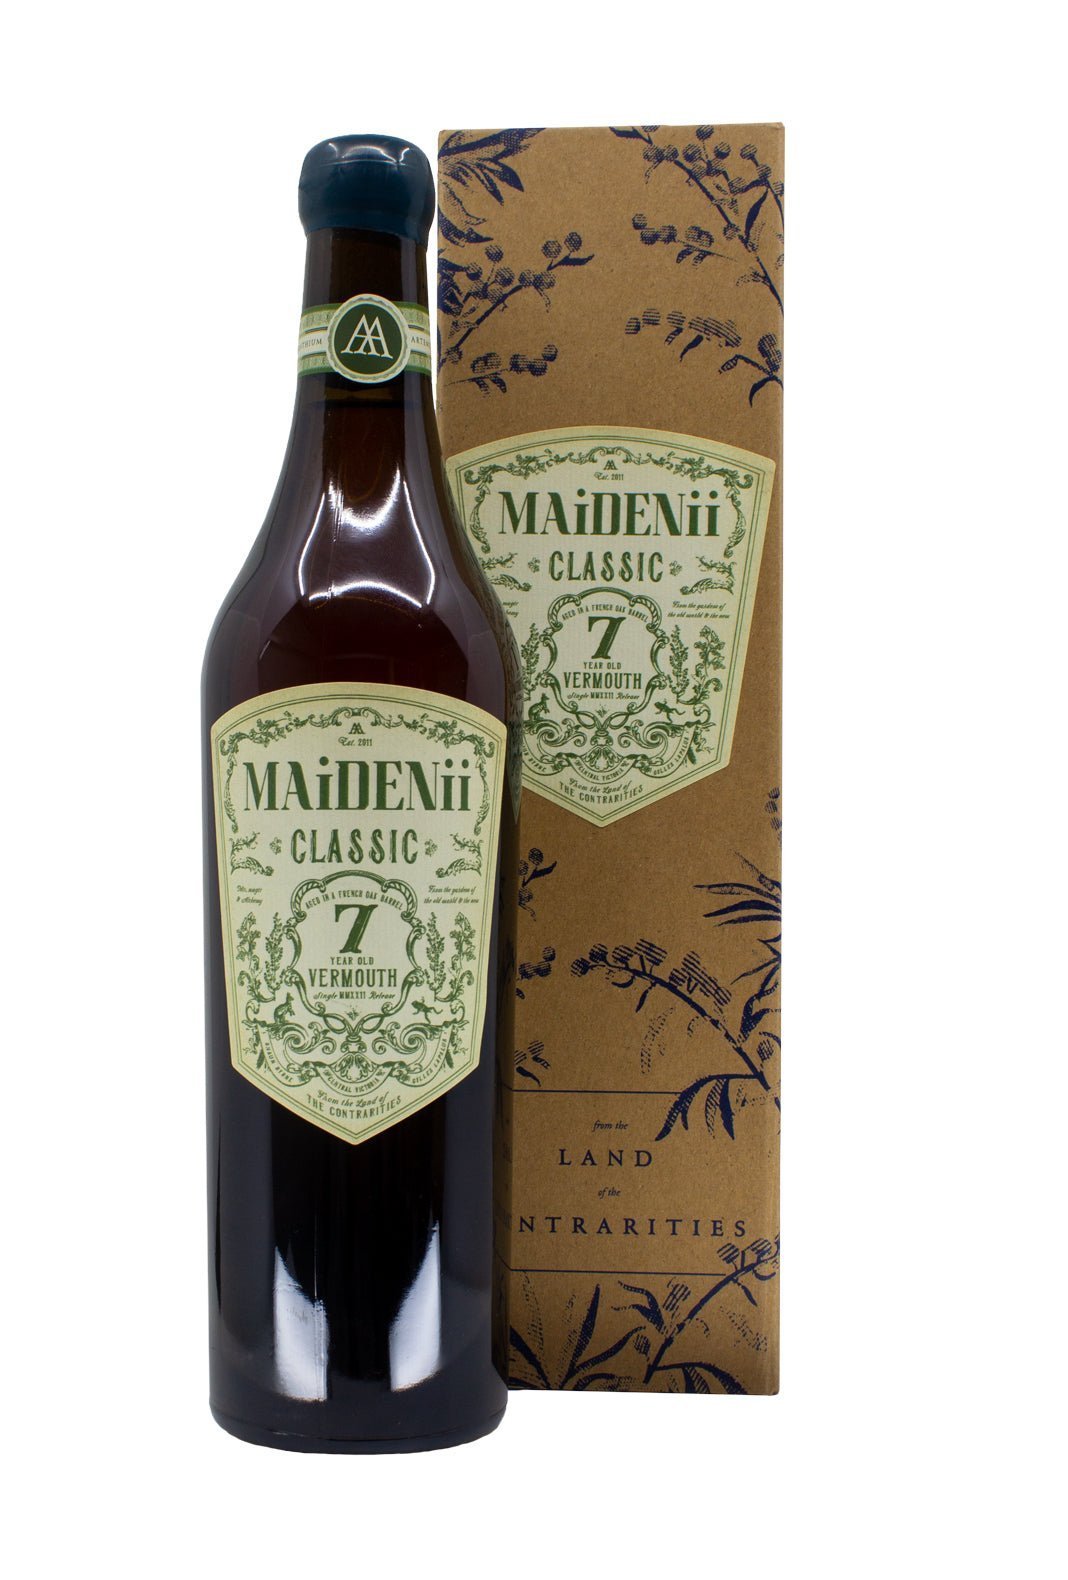 Maidenii Classic 7 Single Cask Vermouth 17% 500ml - Vermouth - Liquor Wine Cave